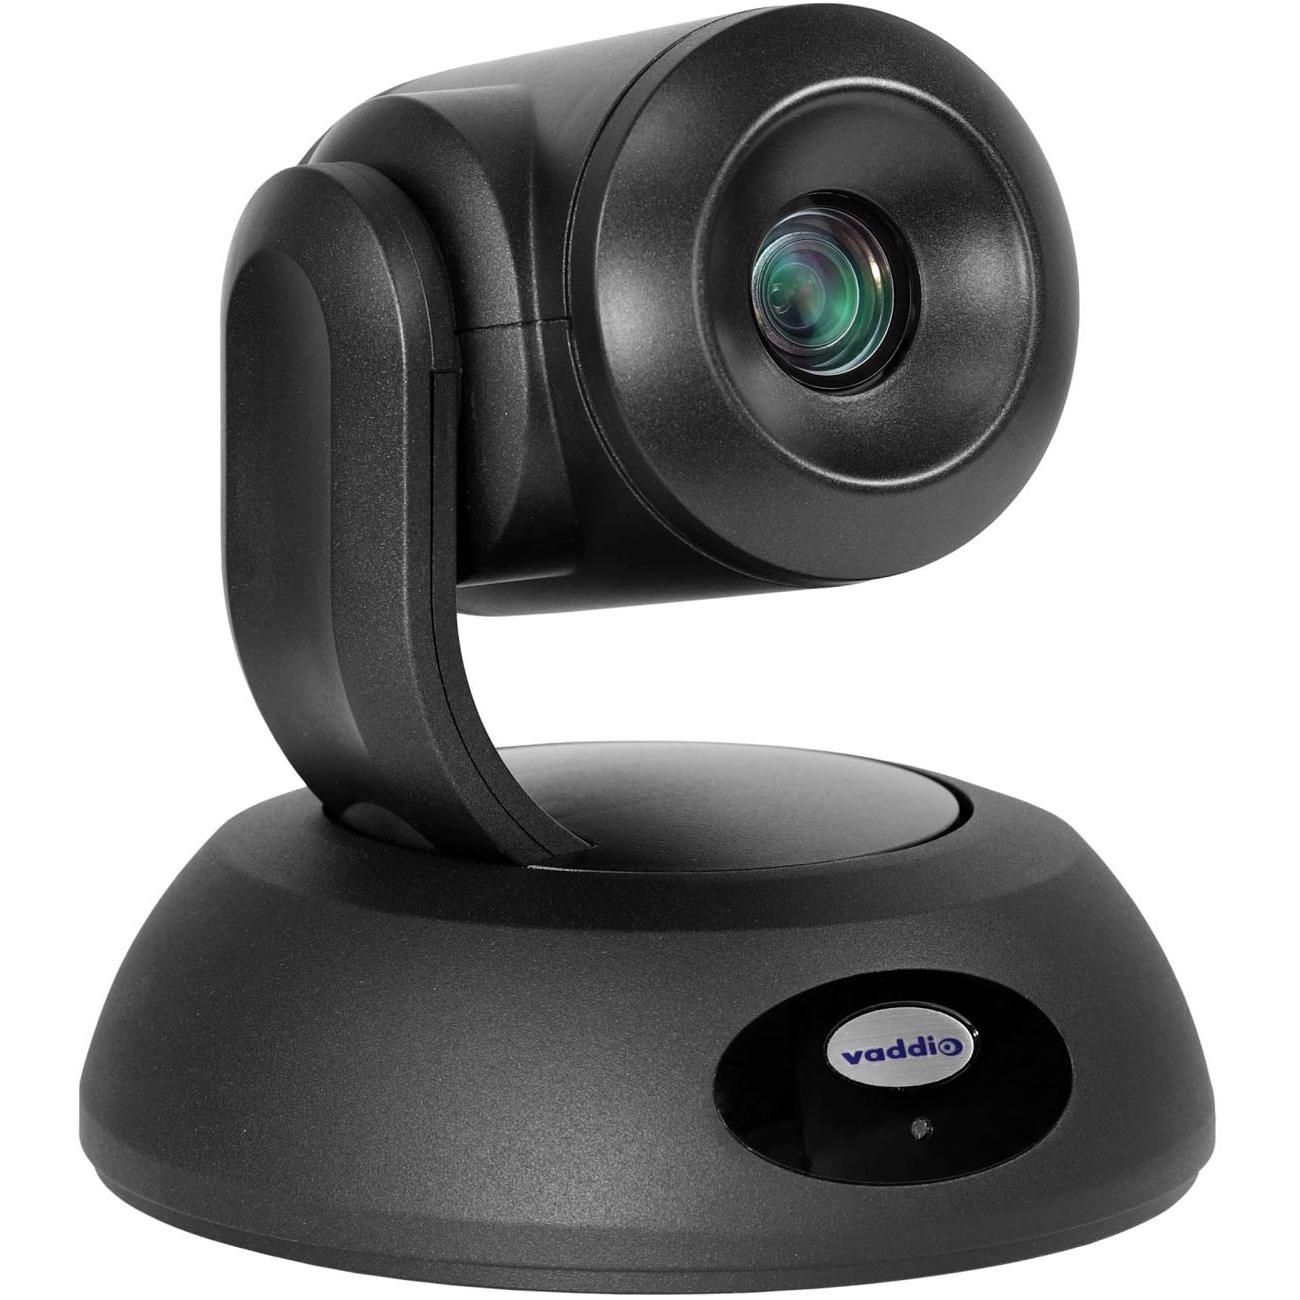 Vaddio RoboSHOT Elite Video Conferencing Camera - 8.5 Megapixel - 60 fps - Black_subImage_1